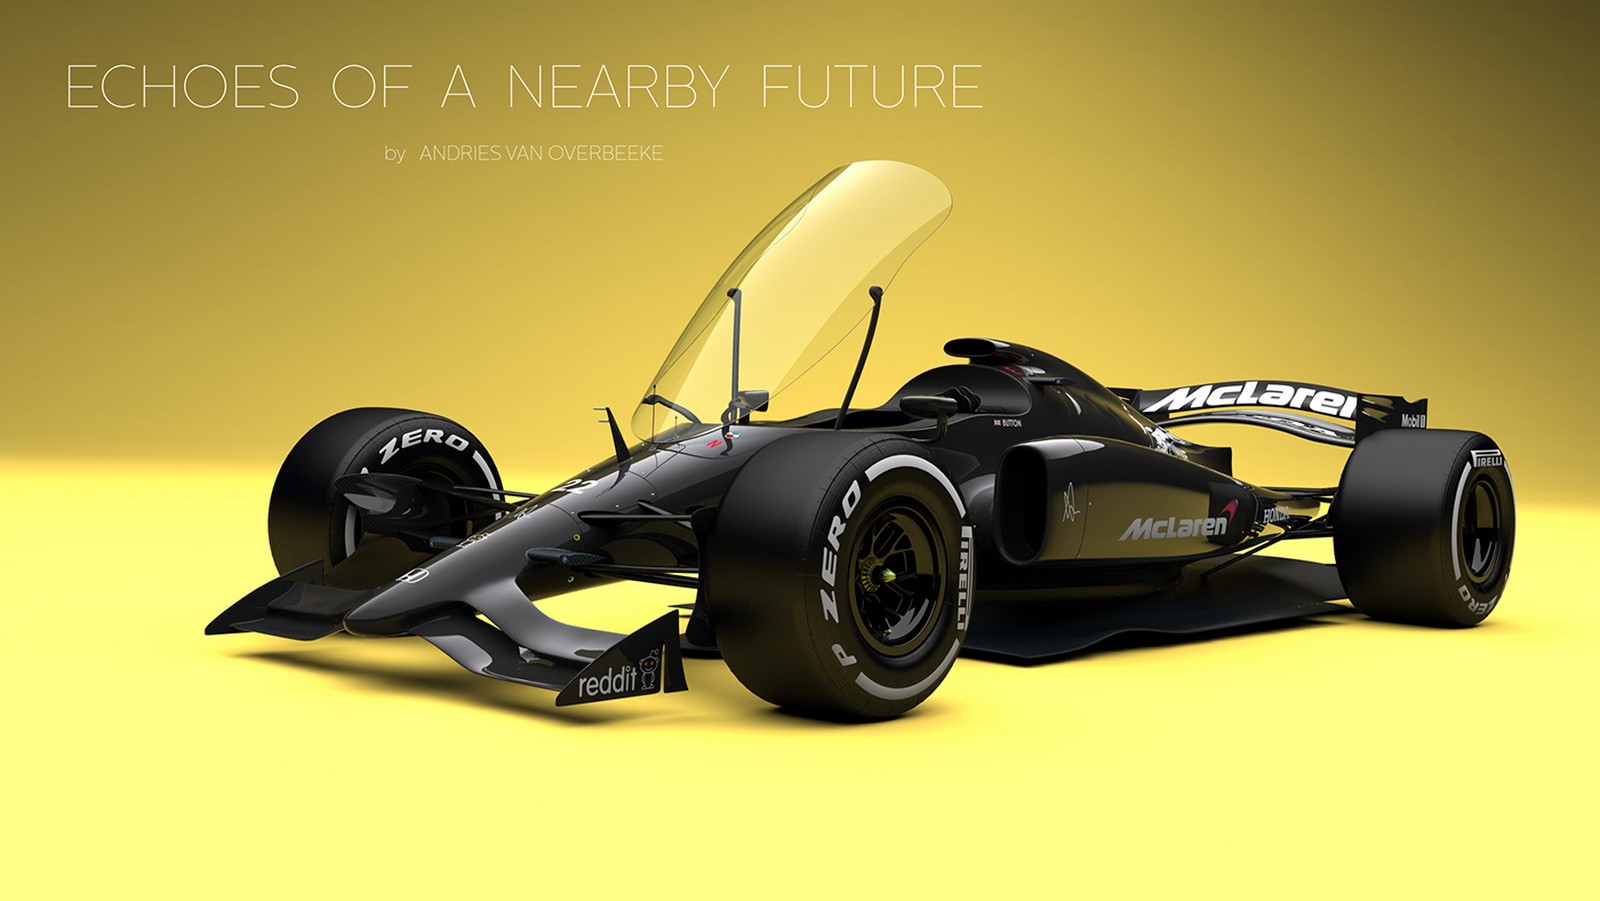 future-formula-1-concept-earns-closed-cockpit-honda-mclaren-livery-photo-gallery_26